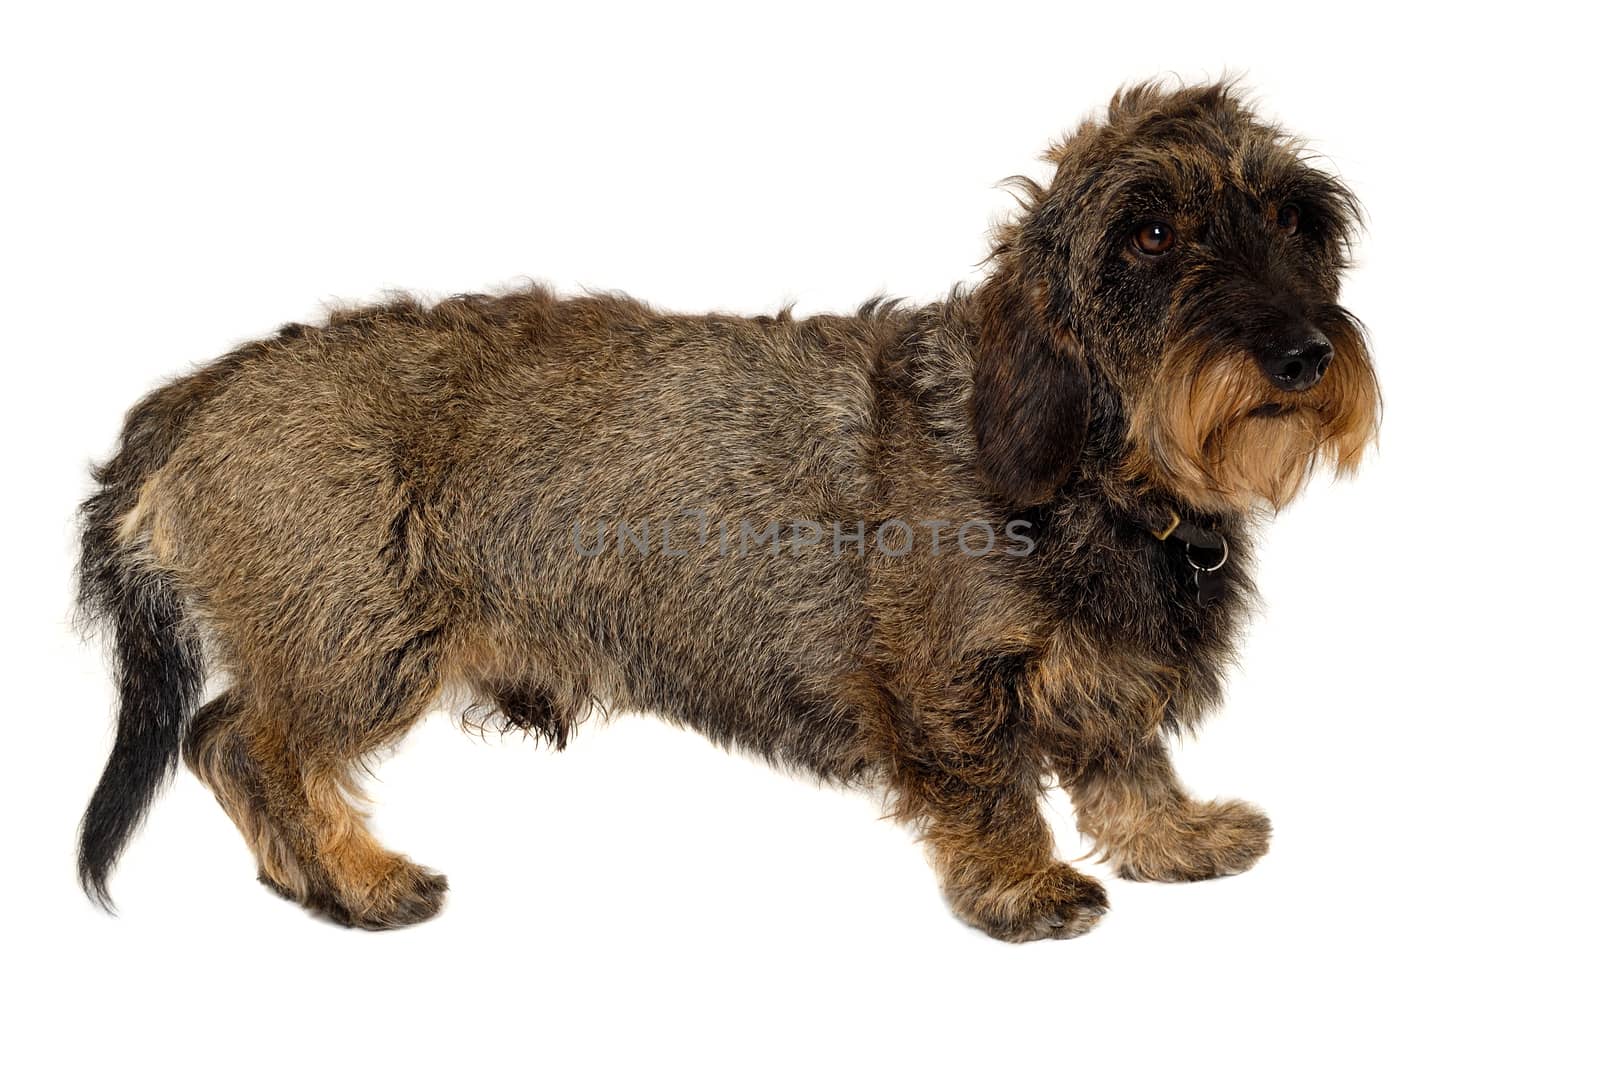 Dachshund dog is standing on white background